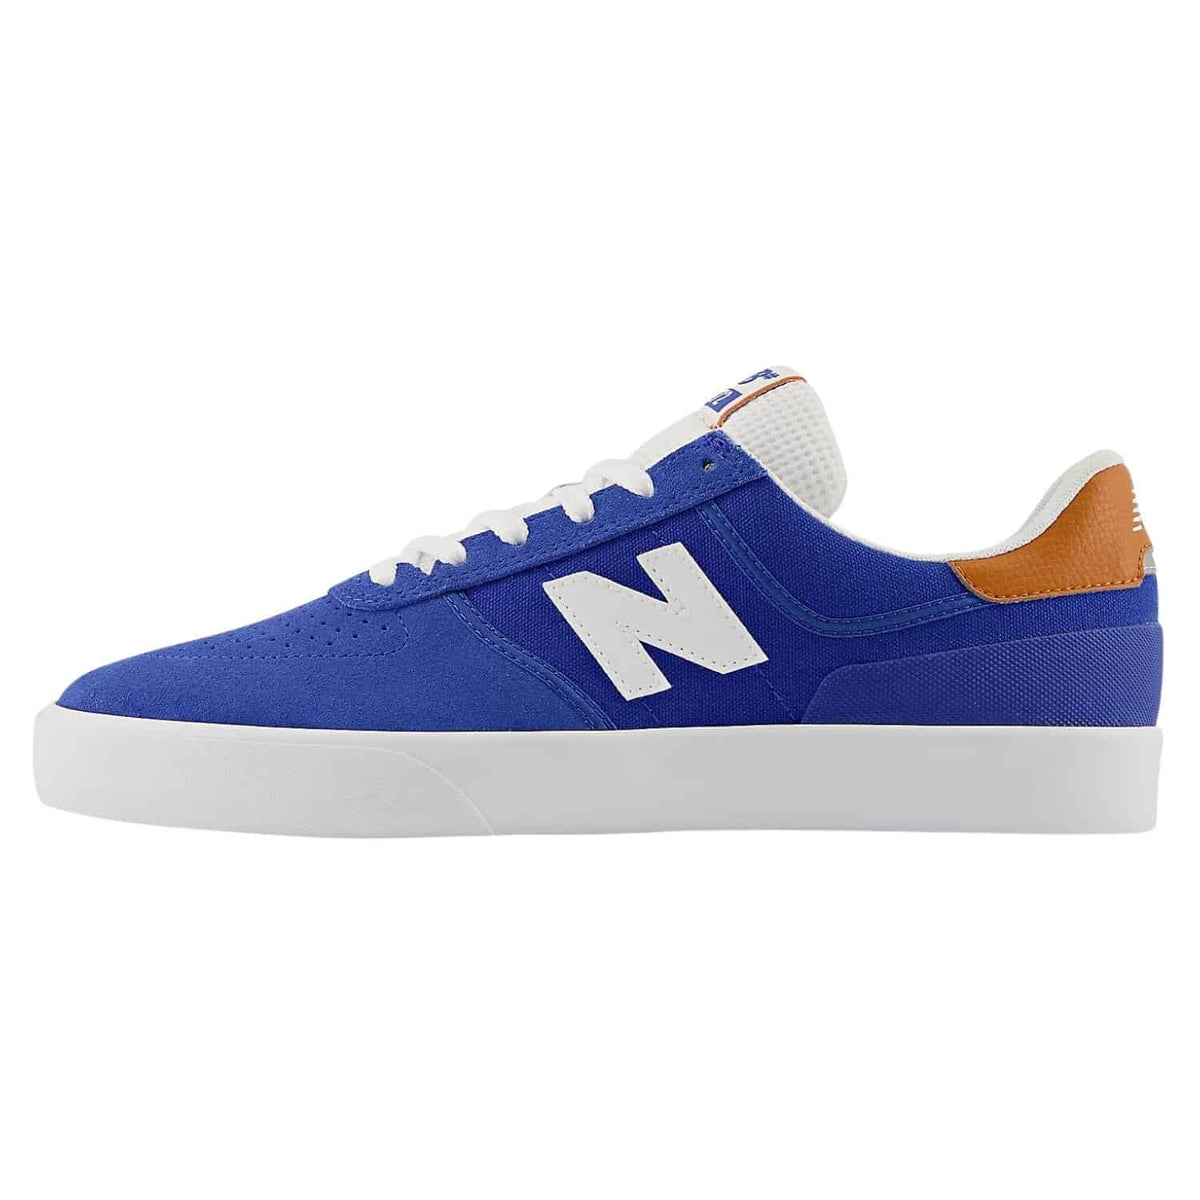 New Balance Numeric NM272 Skate Shoes - Royal Blue/White - Mens Skate Shoes by New Balance Numeric